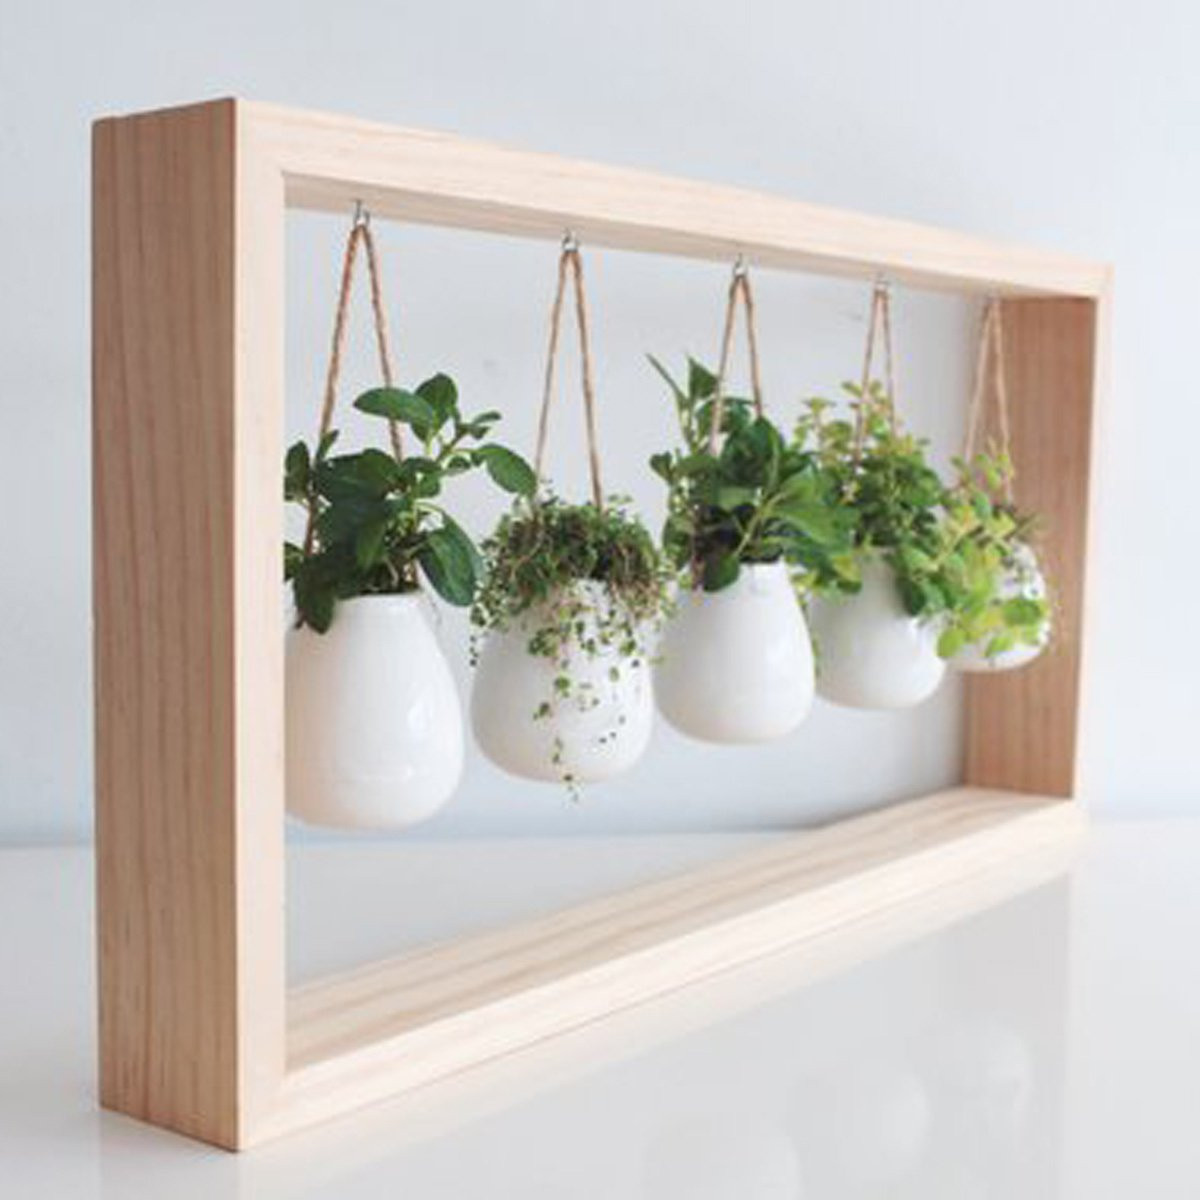 Best ideas about Indoor Herb Garden Planters
. Save or Pin 10 Charming Indoor Herb Garden Planters Now.